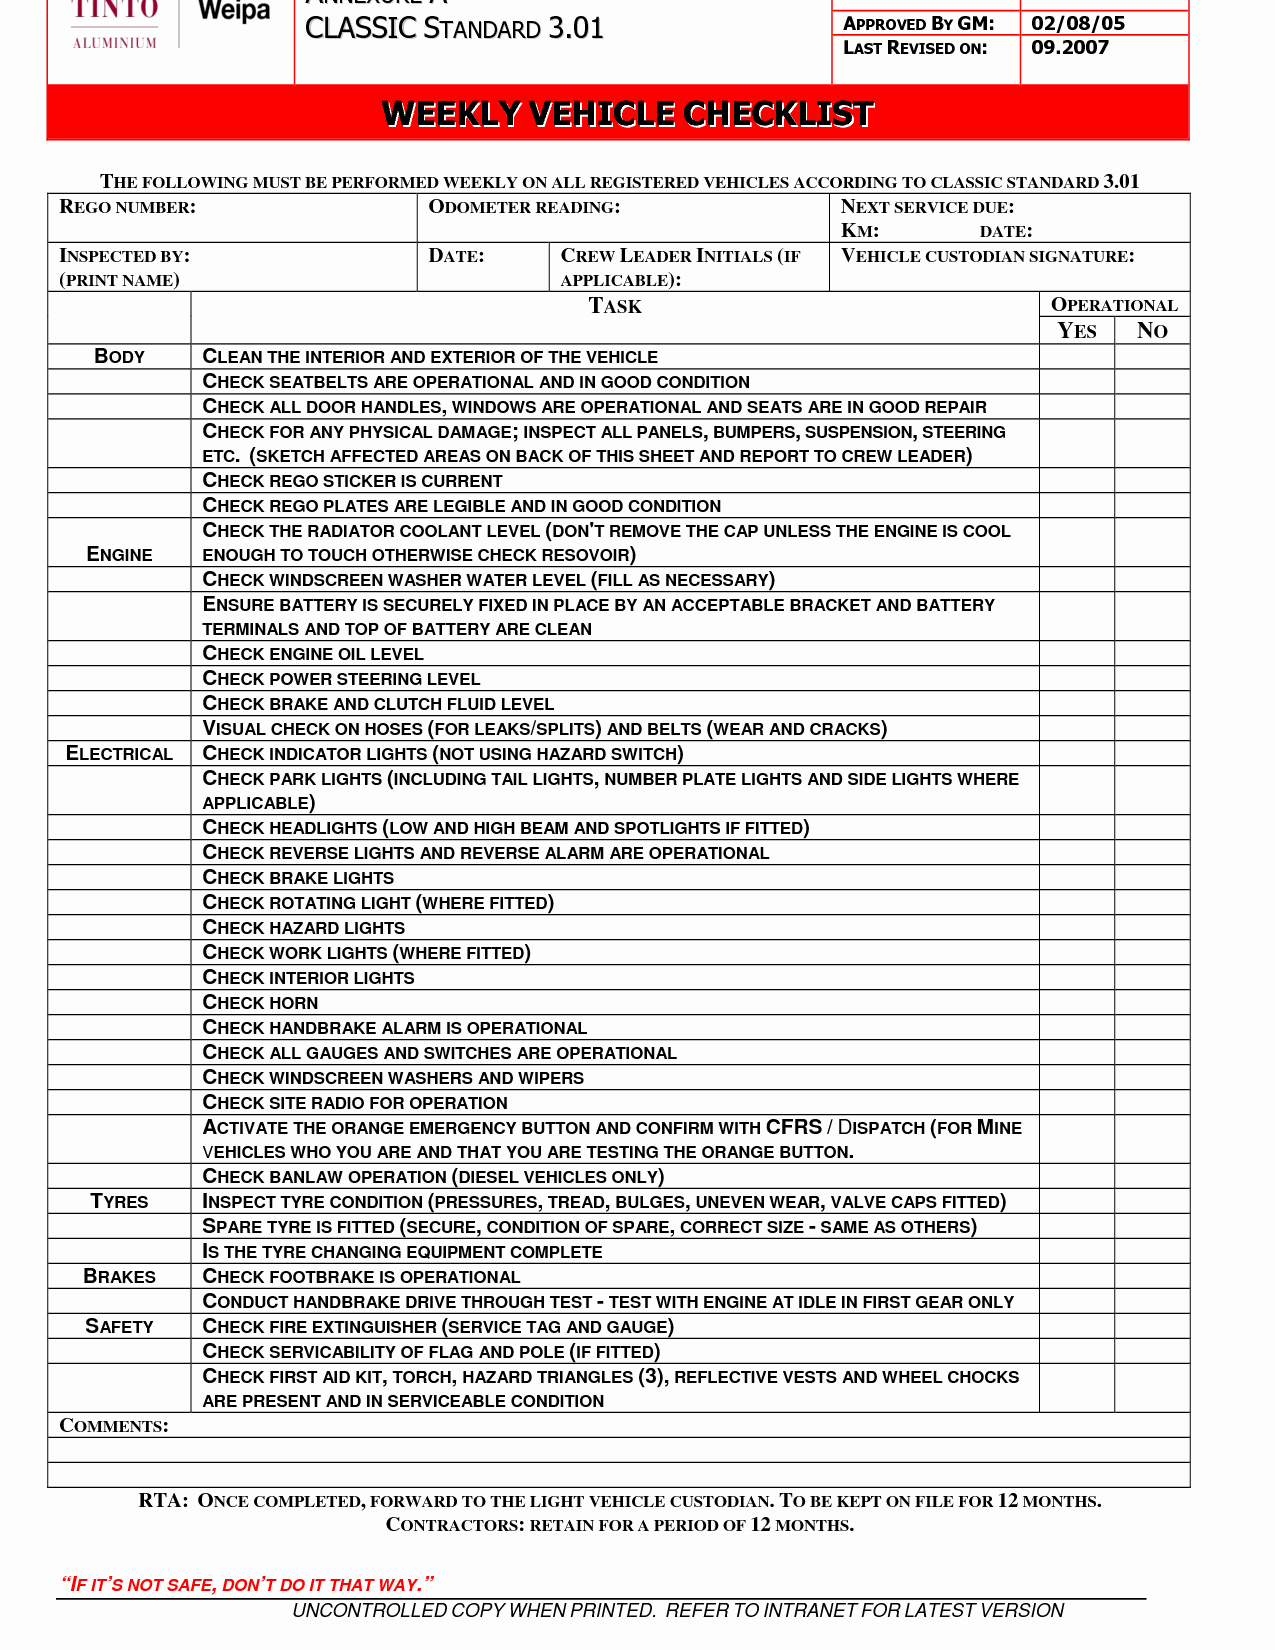 Automotive Inspection Checklist Template Fresh Vehicle Maintenance Checklist Template Ewolf